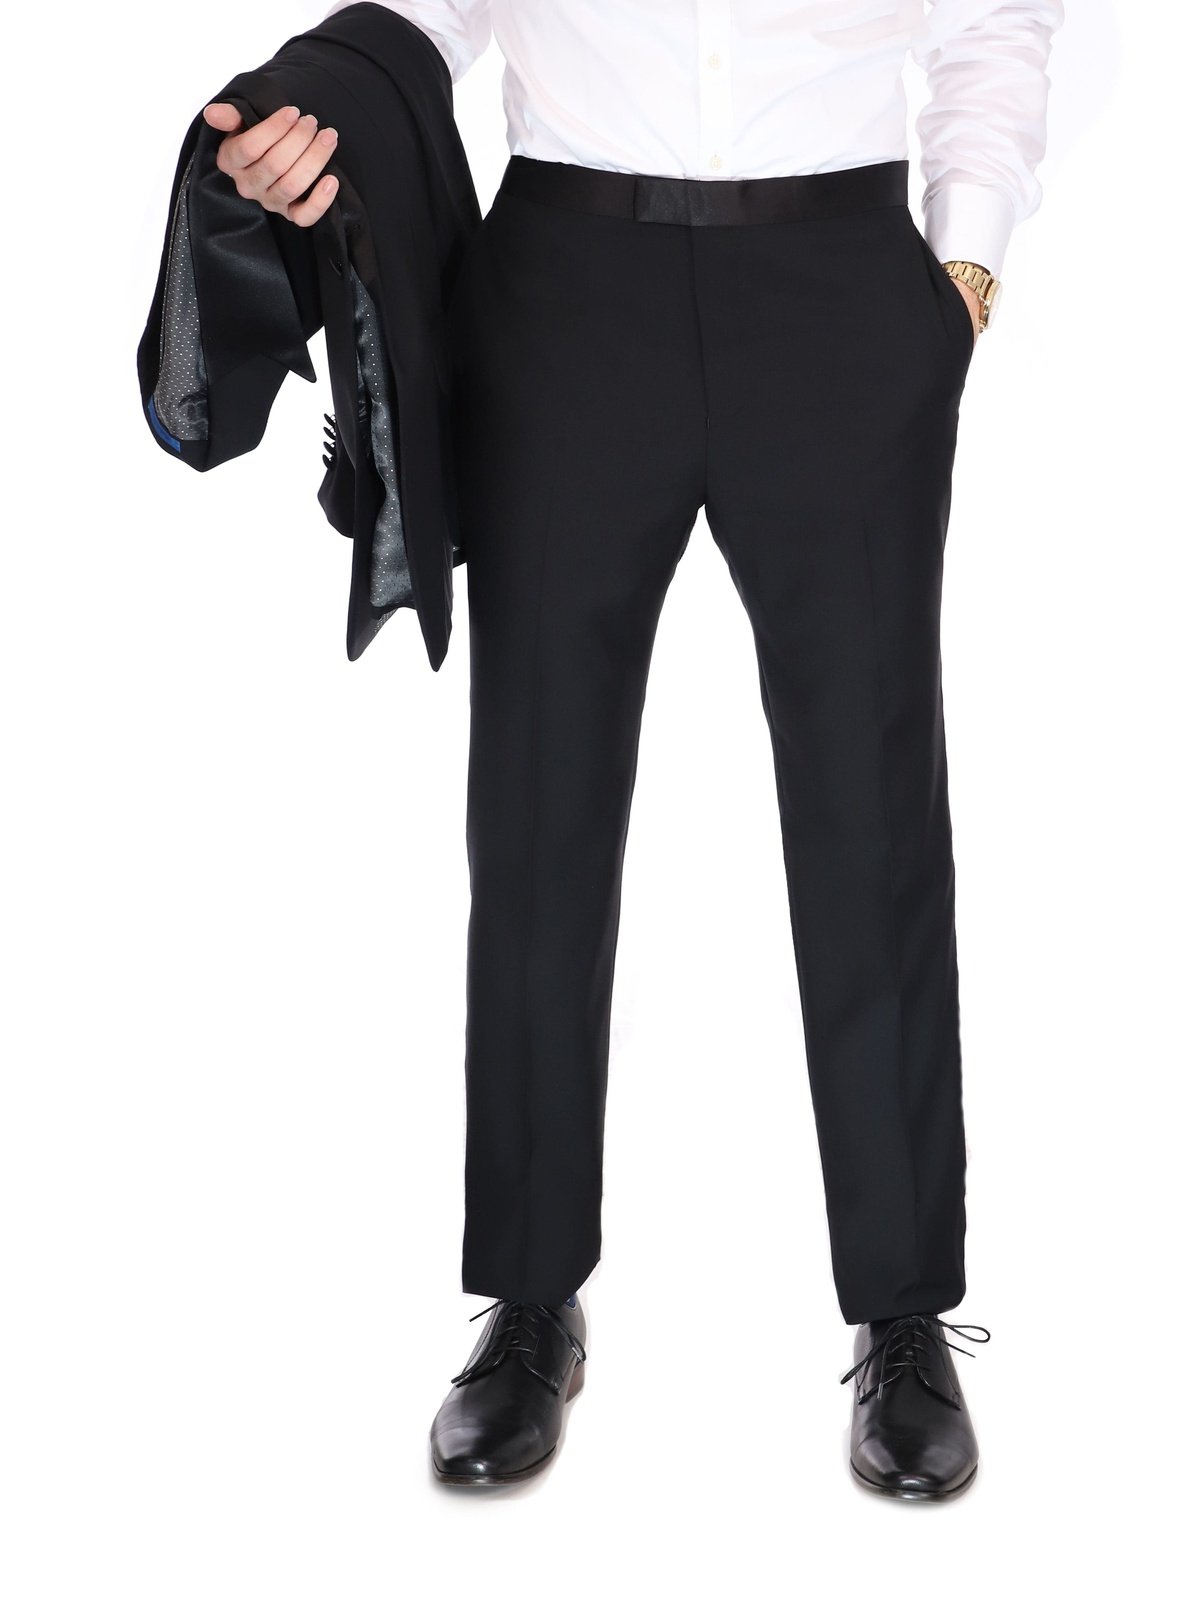 Blujacket TUXEDOS Blujacket Mens Solid Black 100% Wool Trim Fit 2-Piece Tuxedo Suit